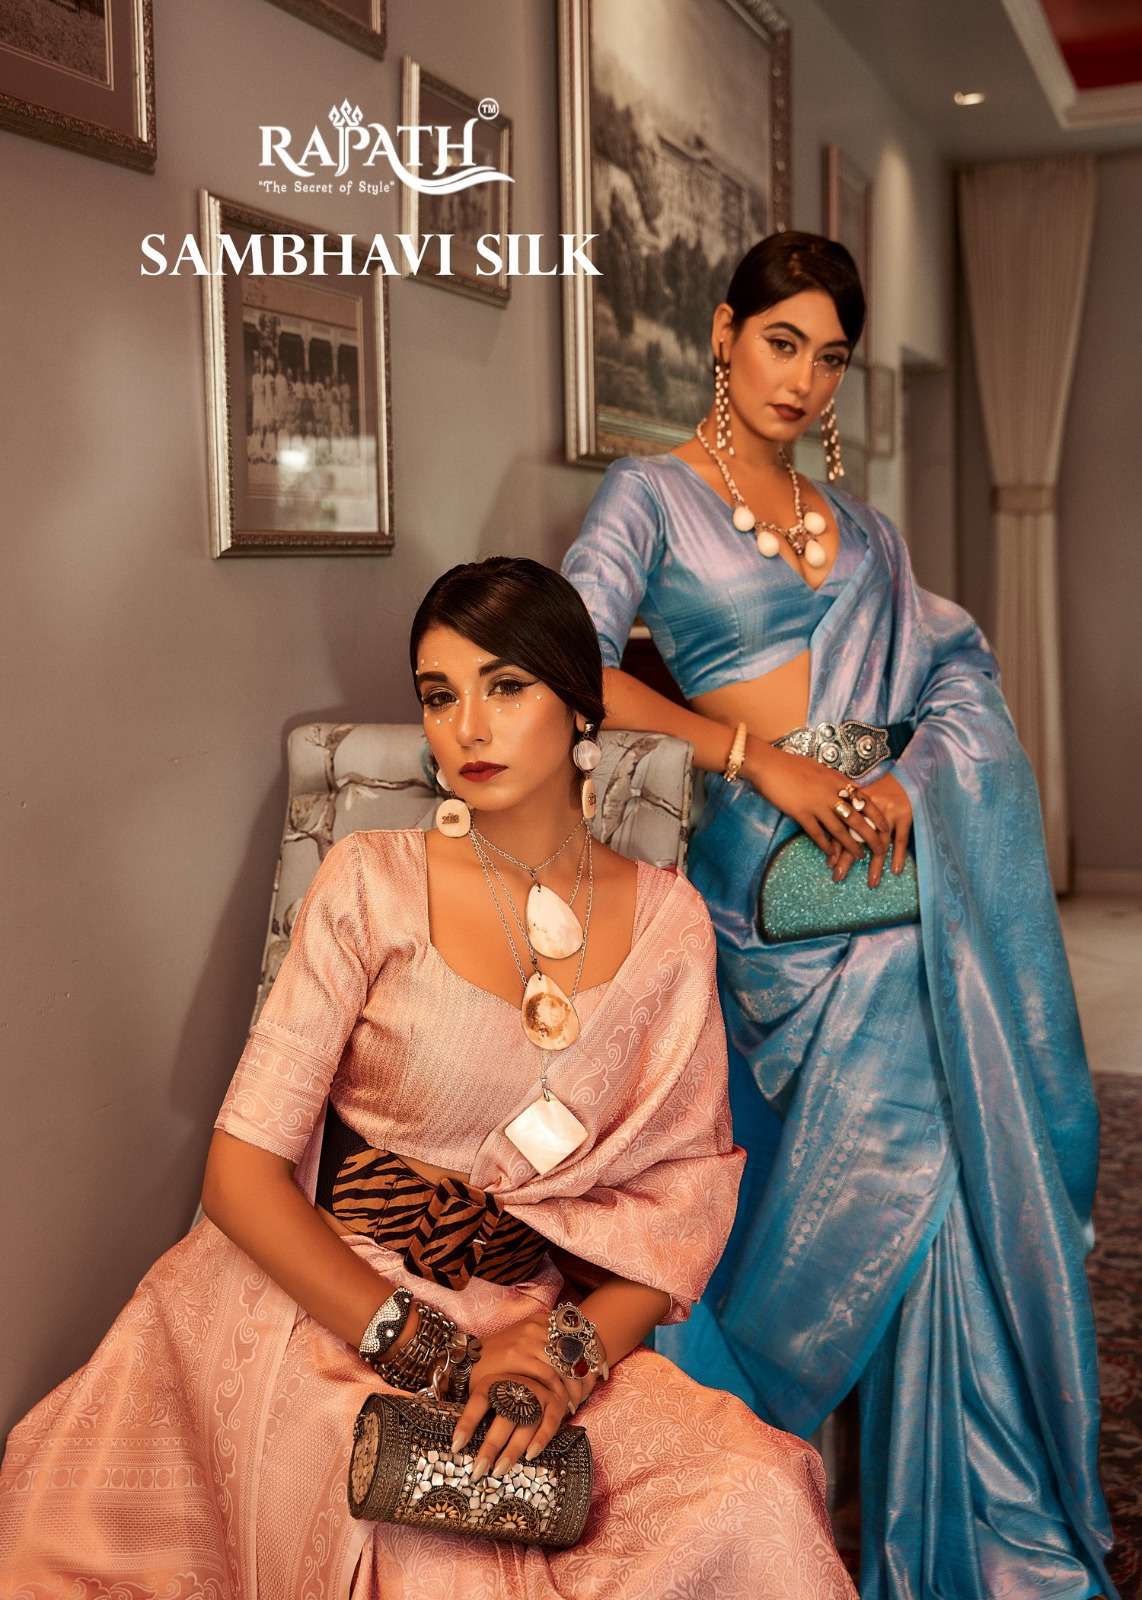 rajpath present sambhavi silk 152001-152006 designer sarees collection